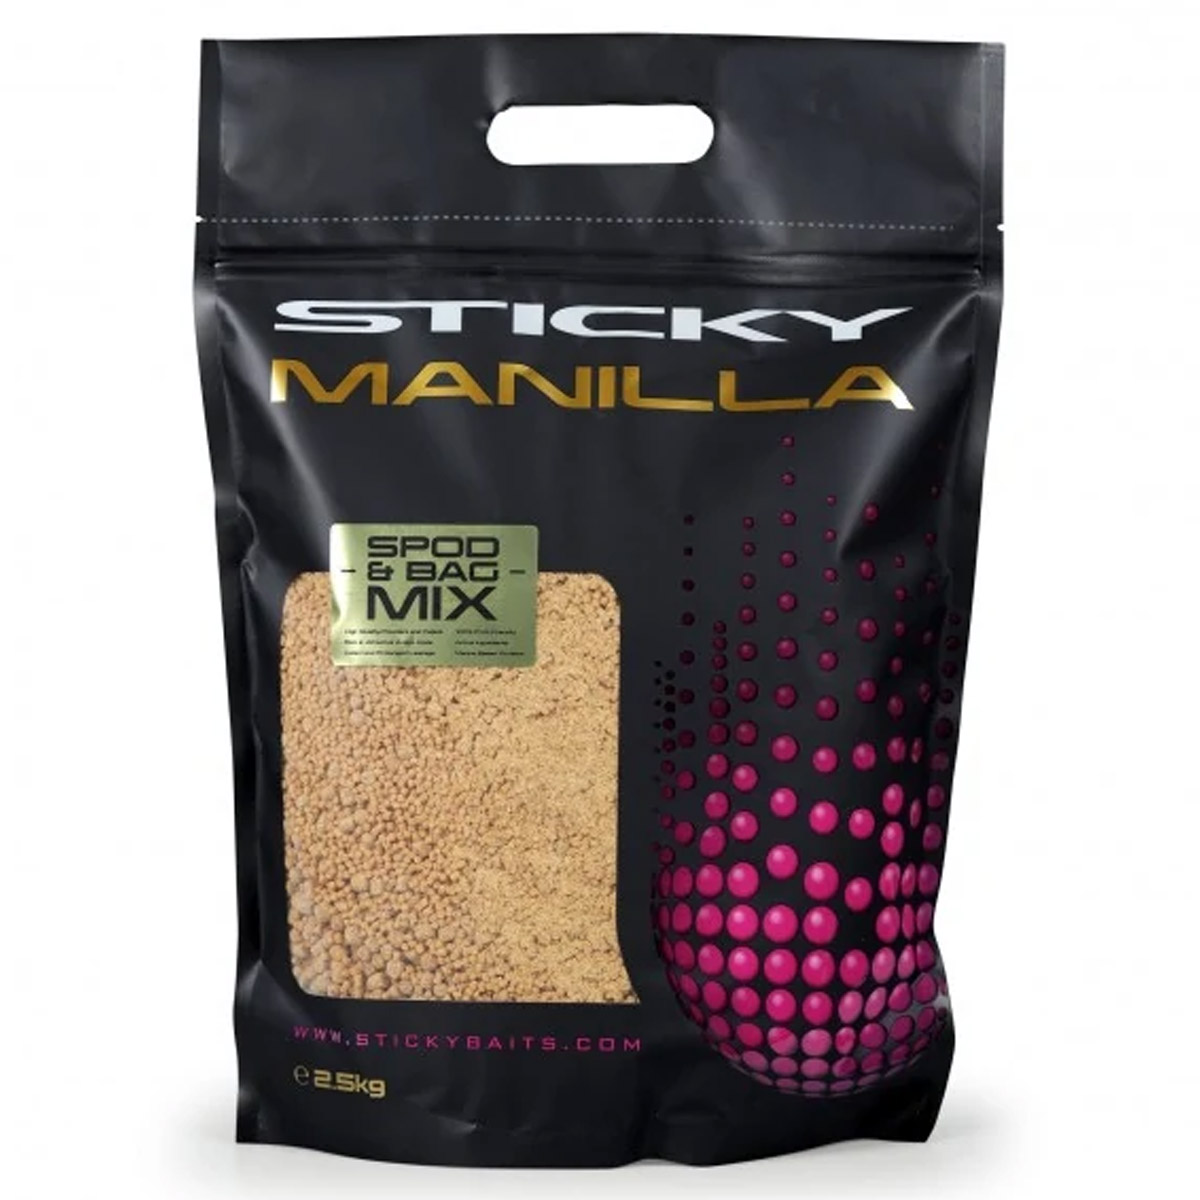 Sticky Baits Manilla Spod & Bag Mix 2,5 Kilo